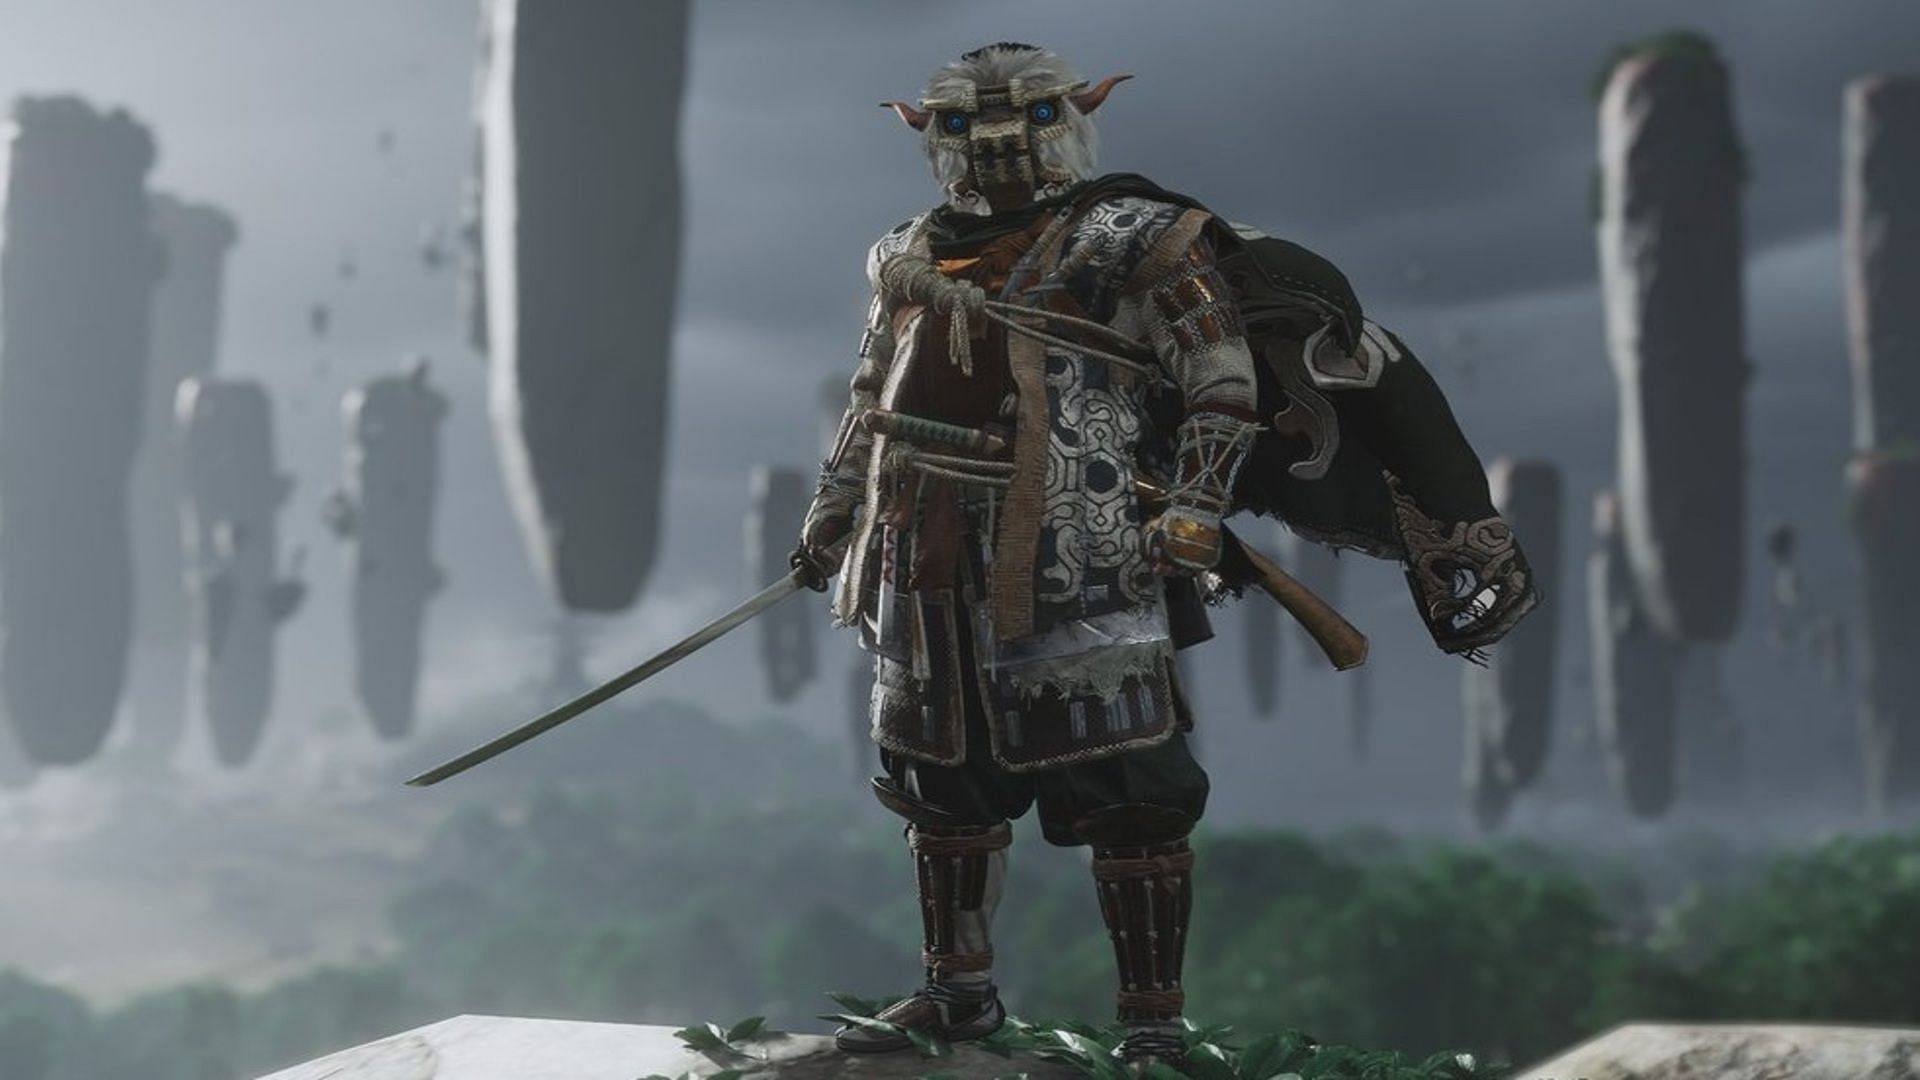 Armor of Colossus (Image via Sony)